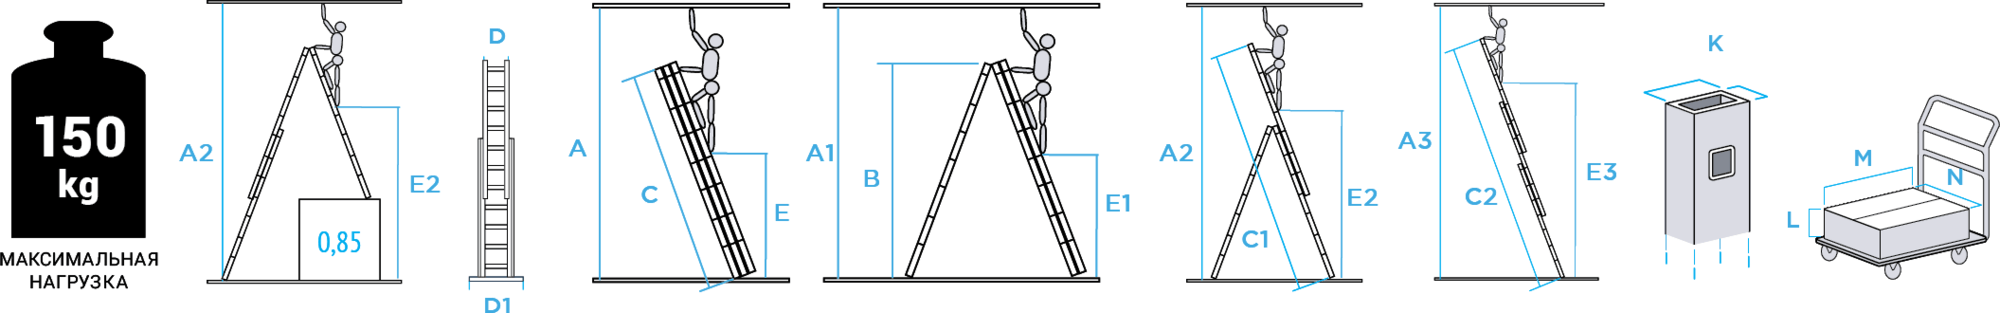 Schema: Three-section aluminum multipurpose ladder NV2230